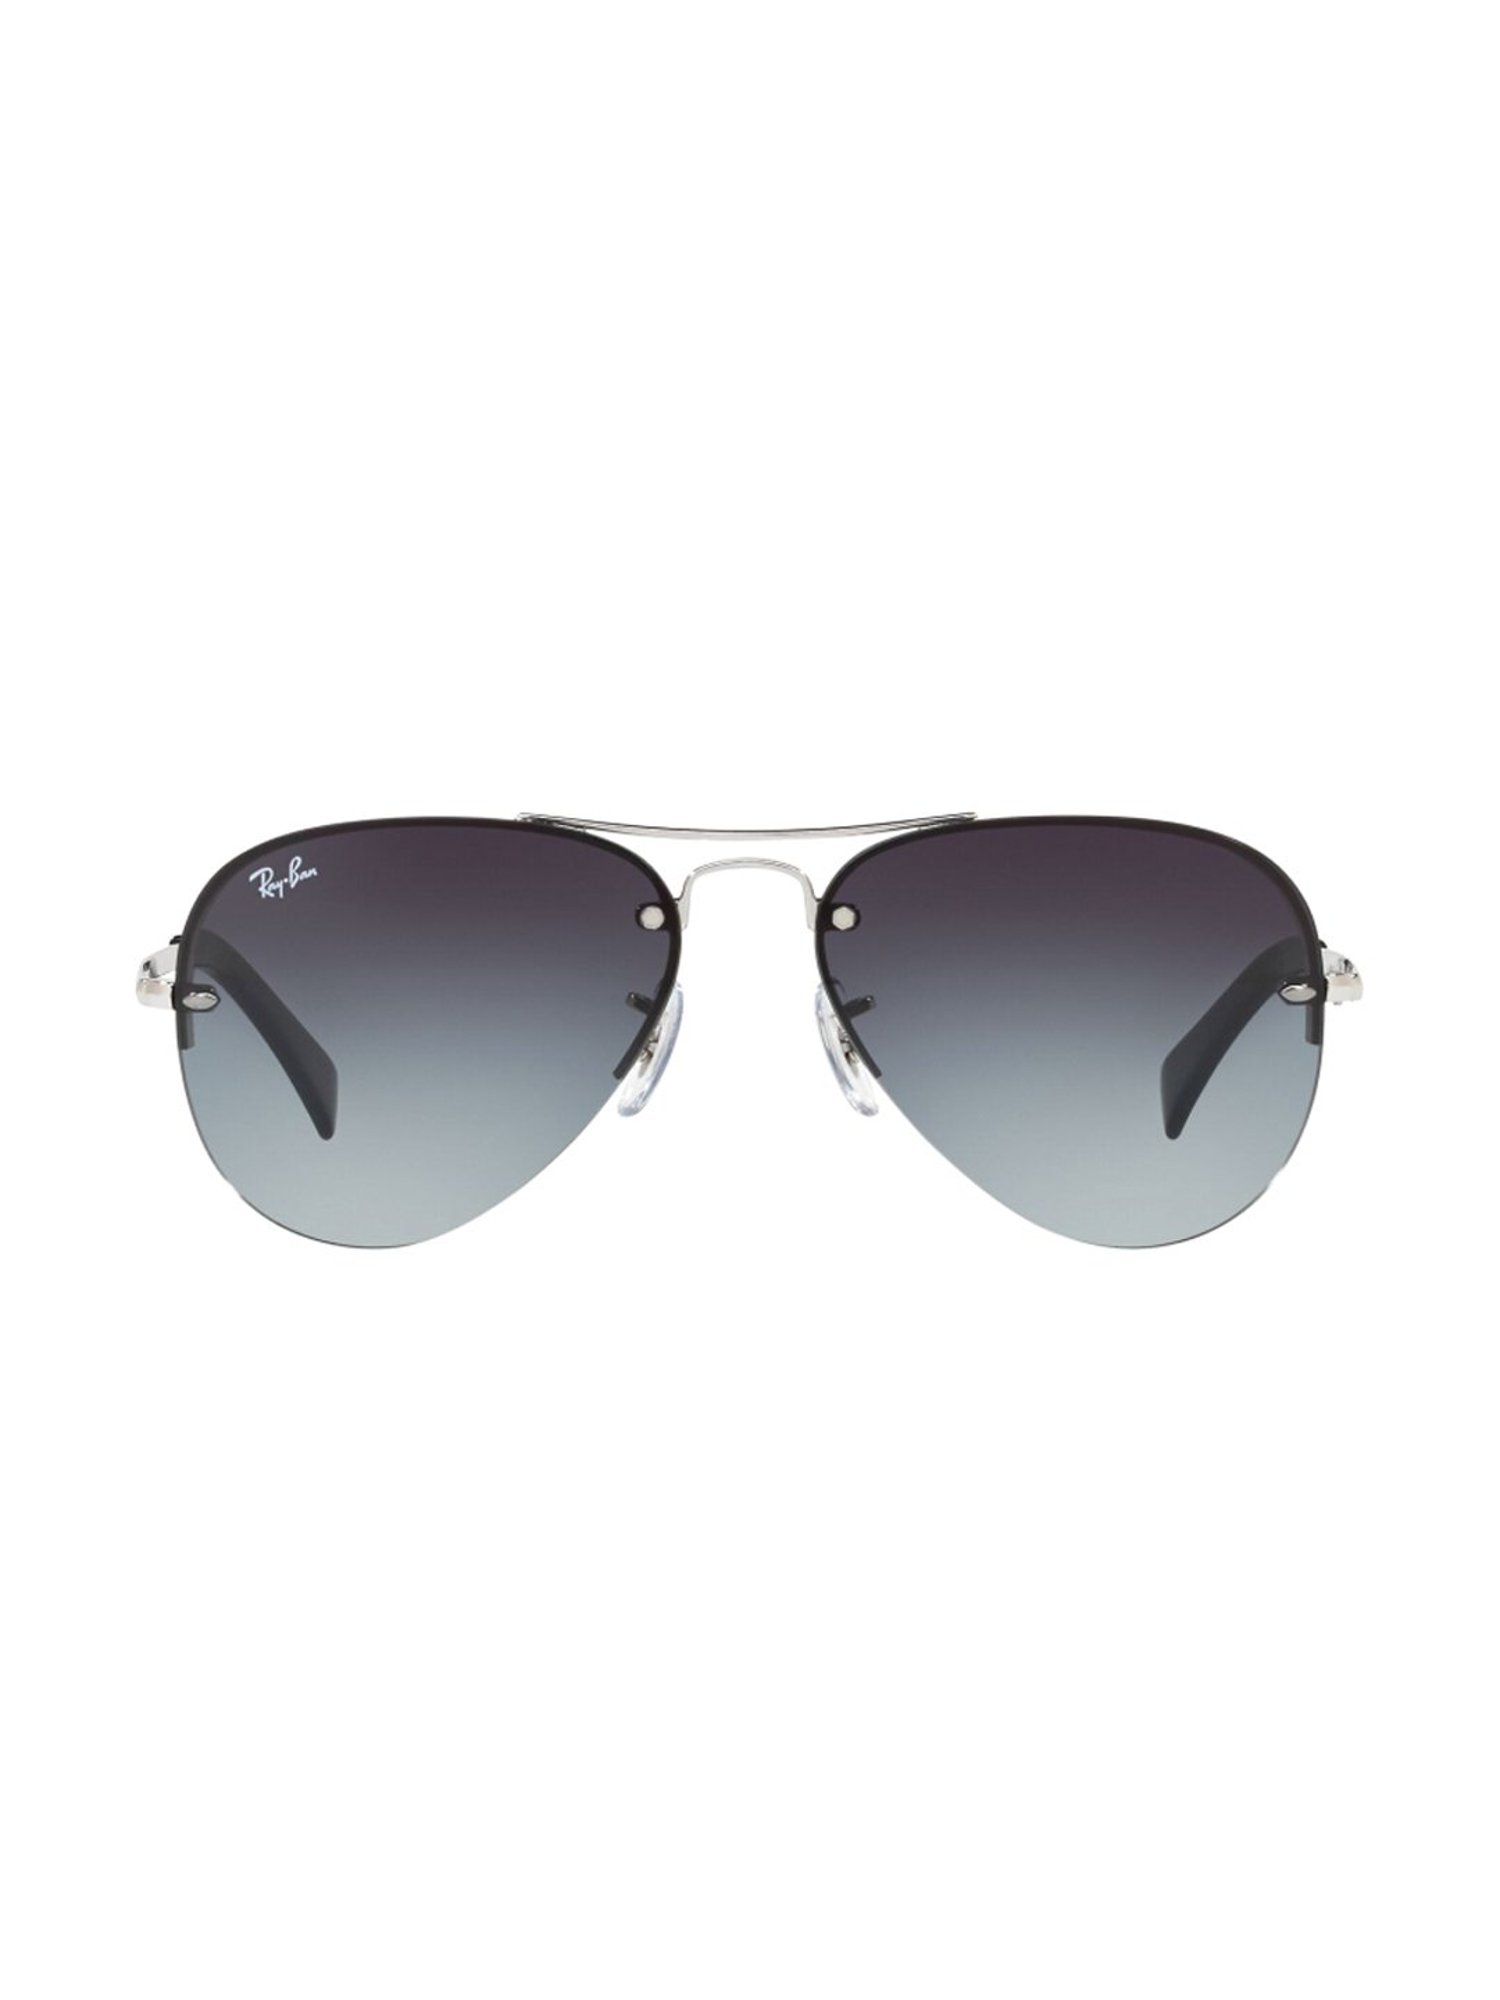 Ray Ban Highstreet 59mm Semi Rimless Aviator Sunglasses - Brown/ Pink |  ModeSens